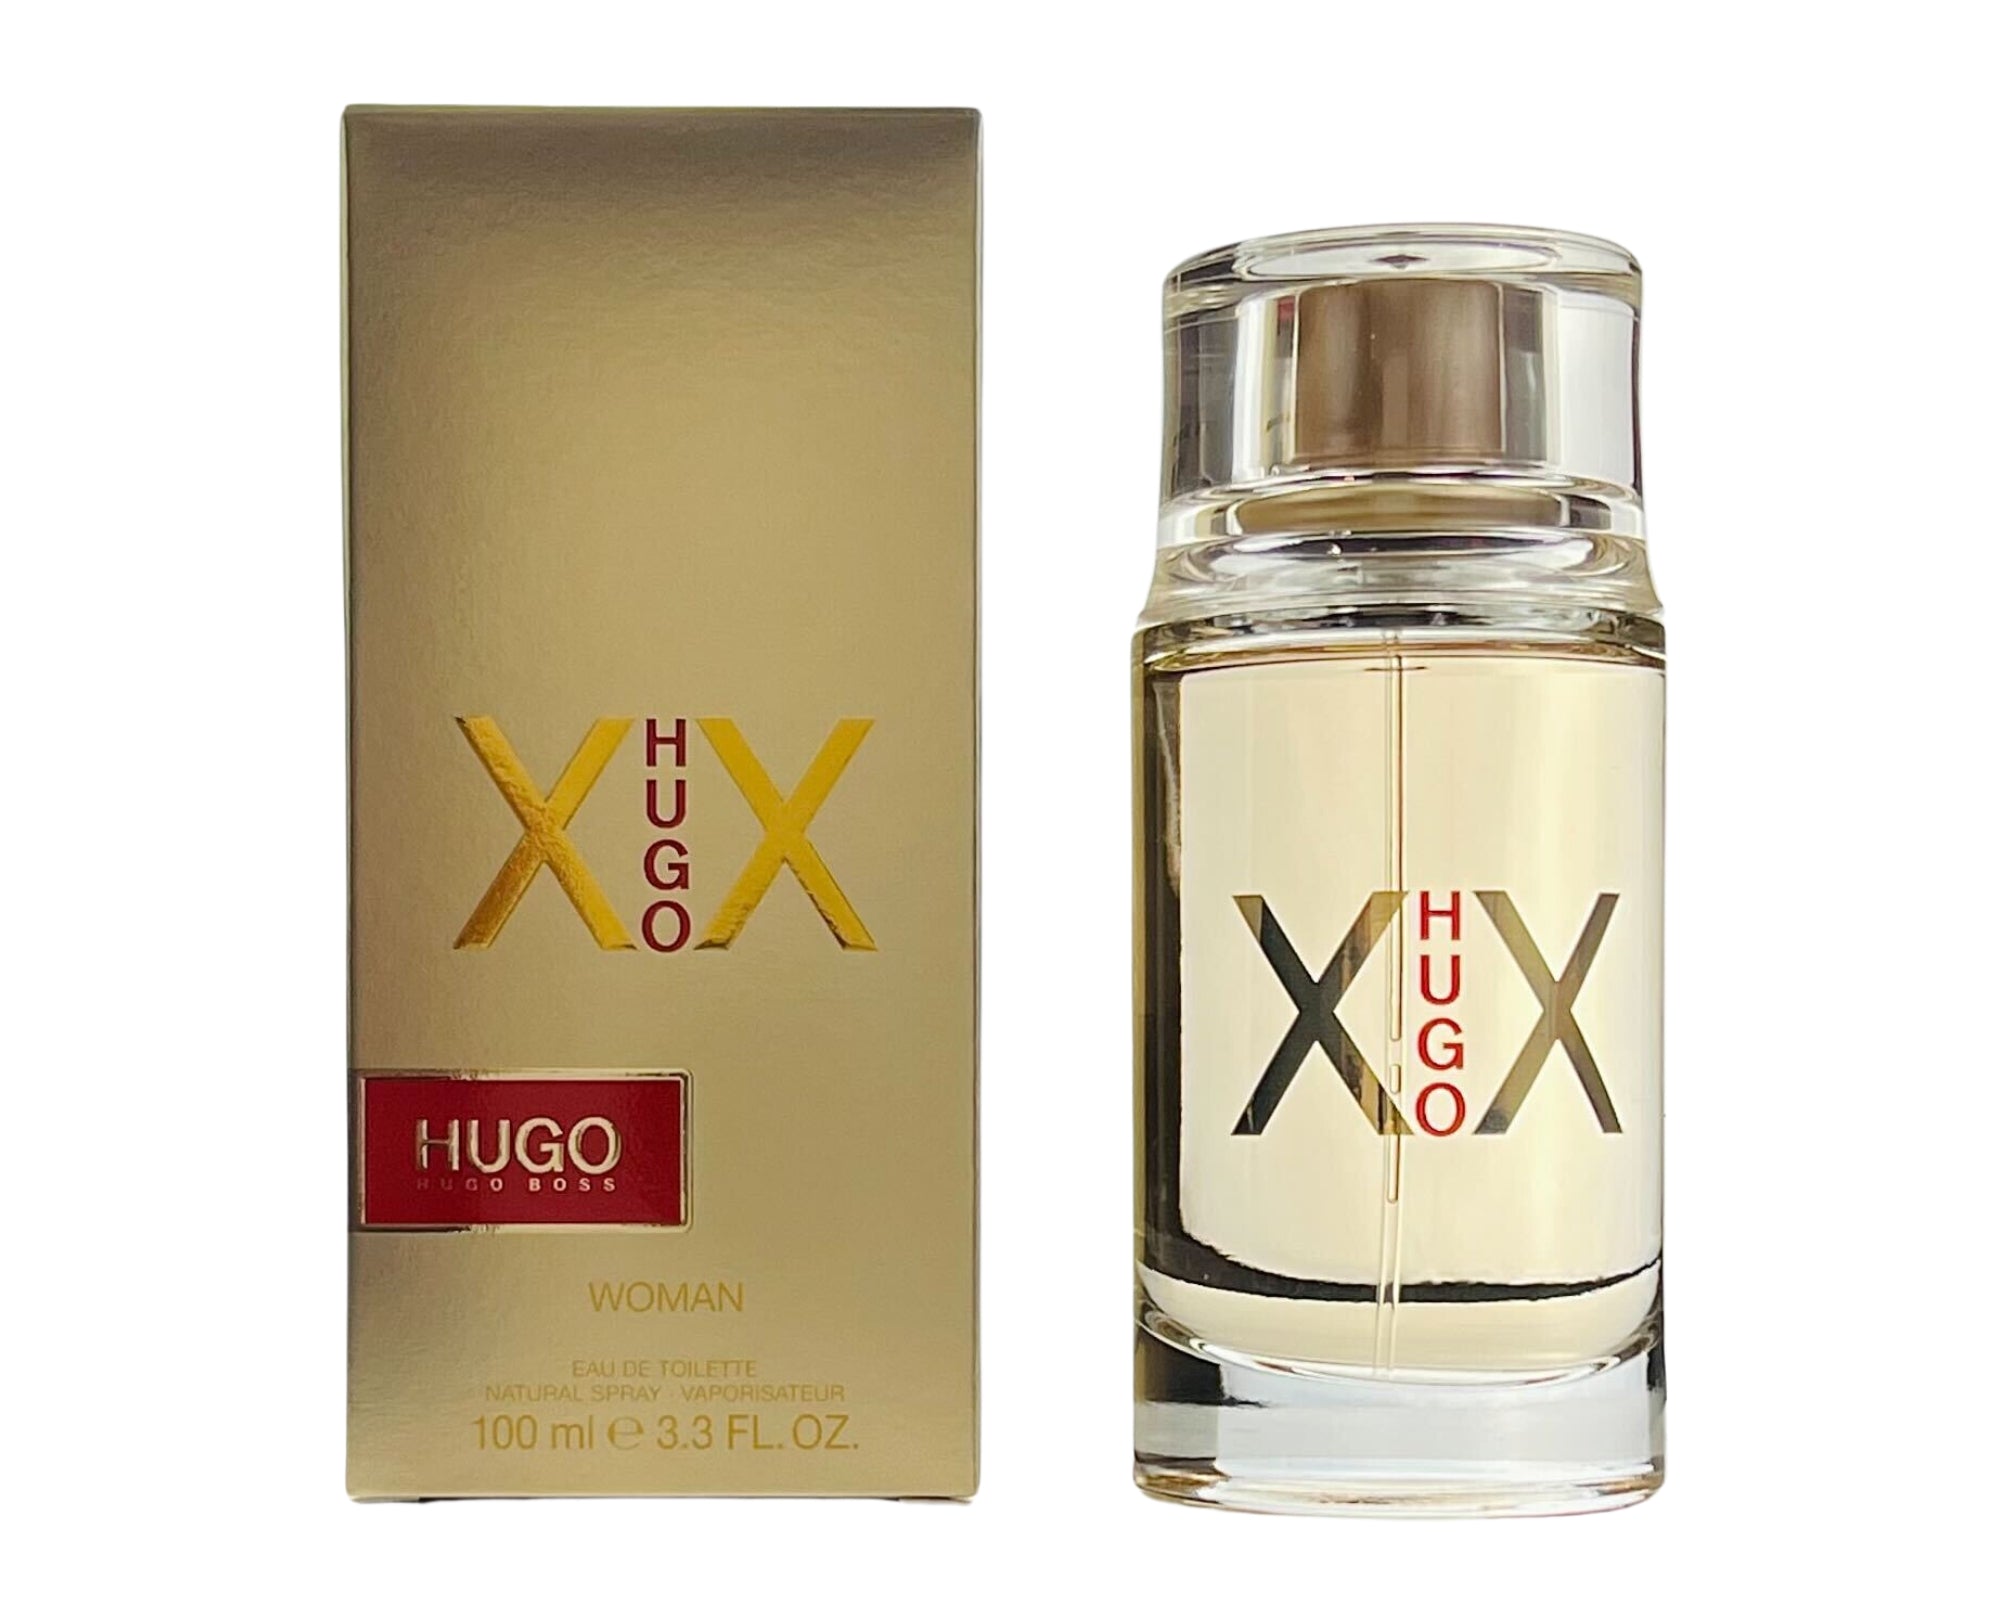 Hugo Xx Perfume Eau De Toilette by Hugo Boss